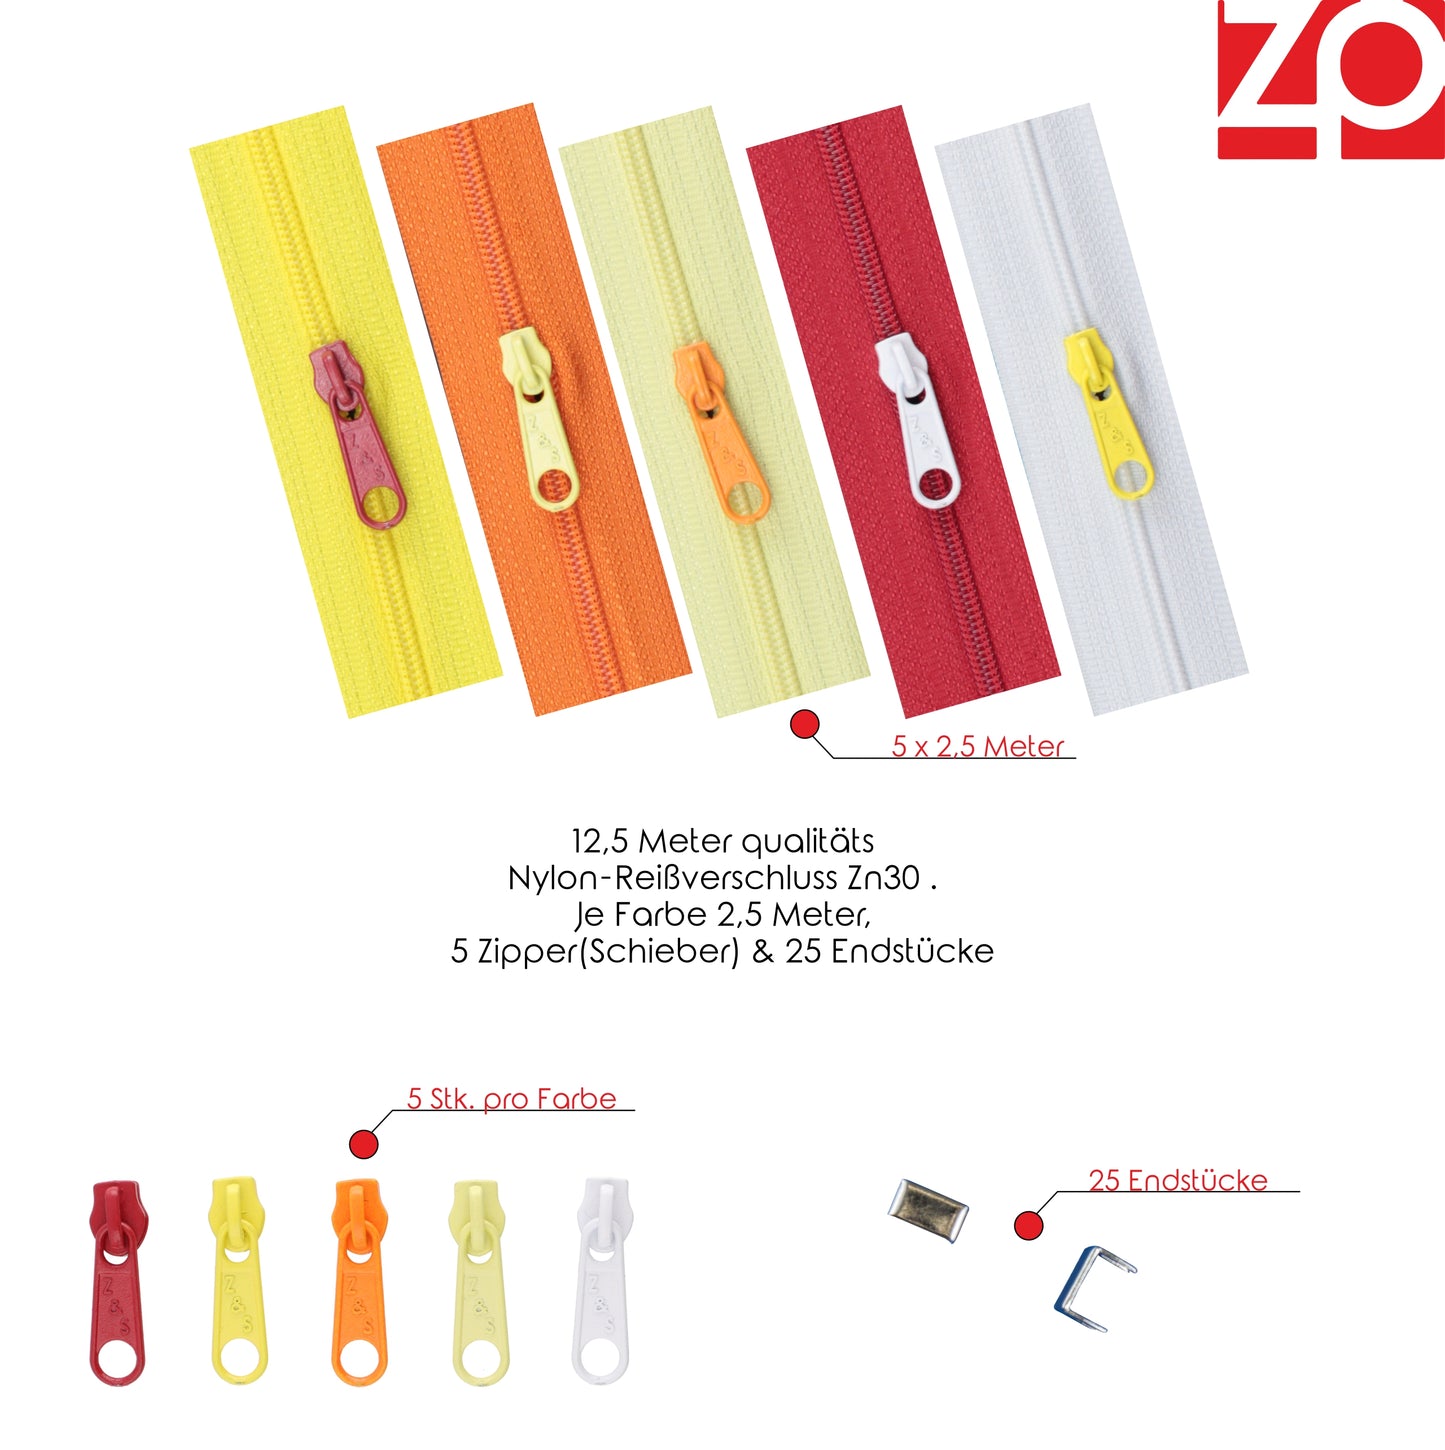 ZIPP AND SLIDE - endless zipper set with slider 3mm 12.5 meters - nickel free - color set no. 4 The original